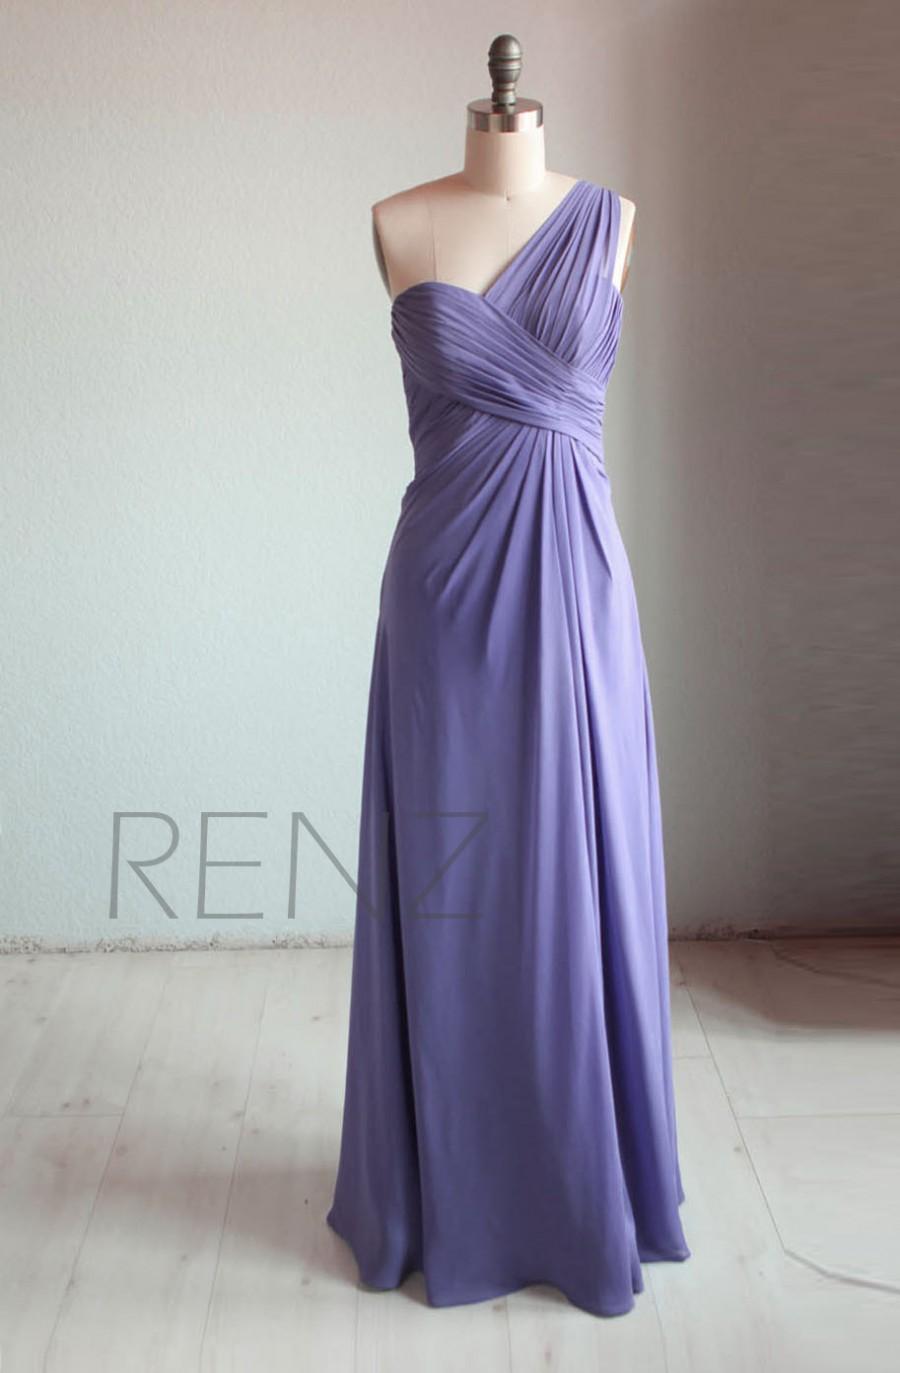 زفاف - 2015 Light Purple Bridesmaid dress, Backless Pleated Party dress, Long Chiffon Formal dress, One shoulder Prom dress floor length (B052)